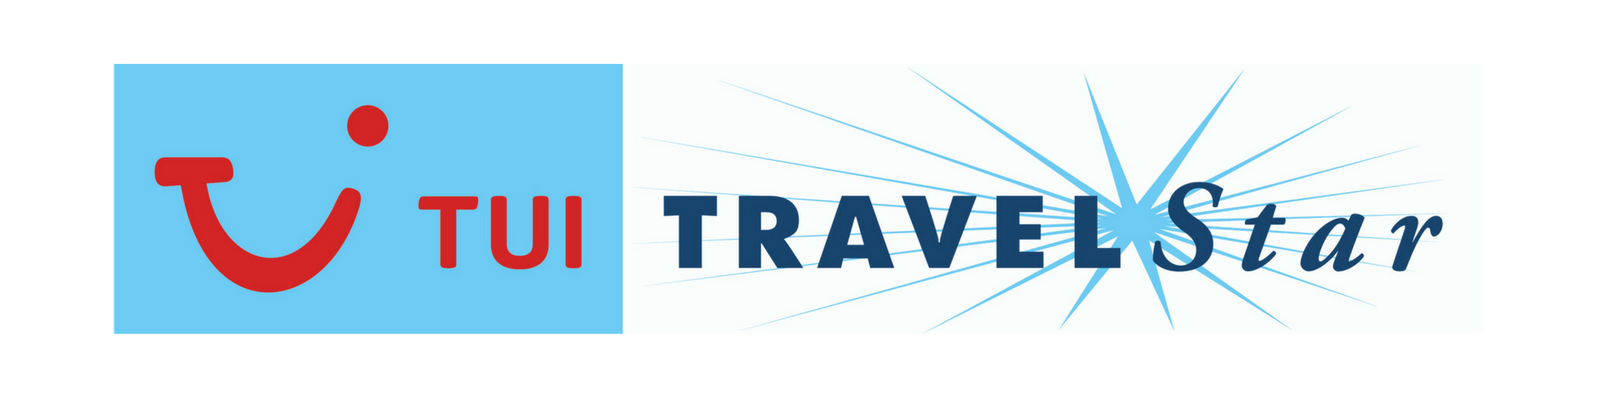 TUI-Travel-Star-logo.png